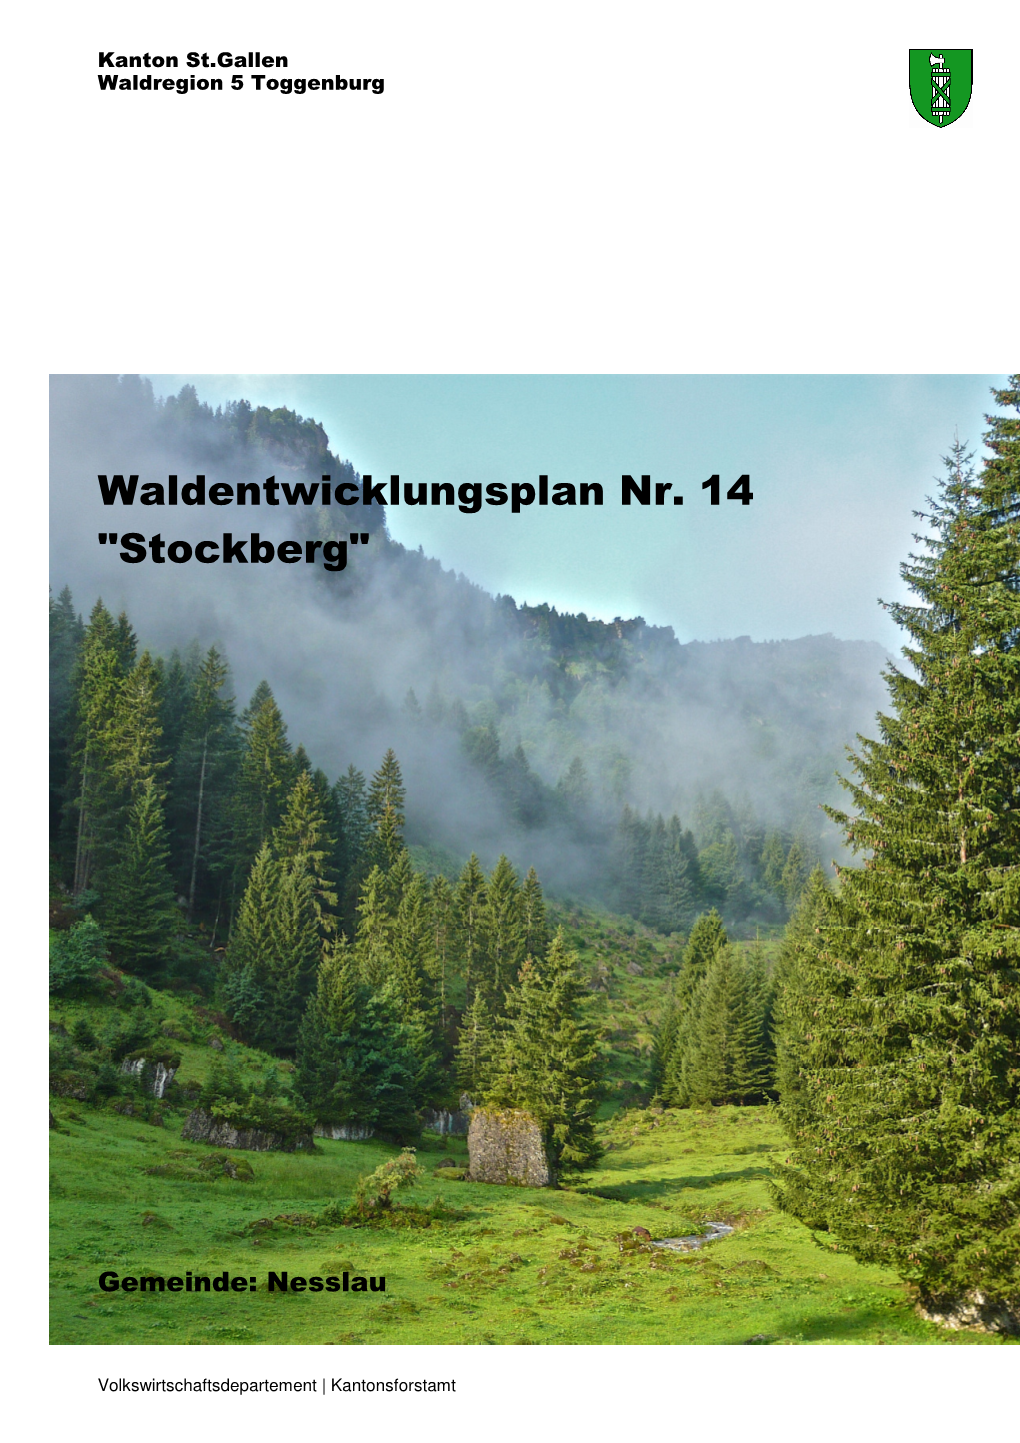 Waldentwicklungsplan Nr. 14 "Stockberg"